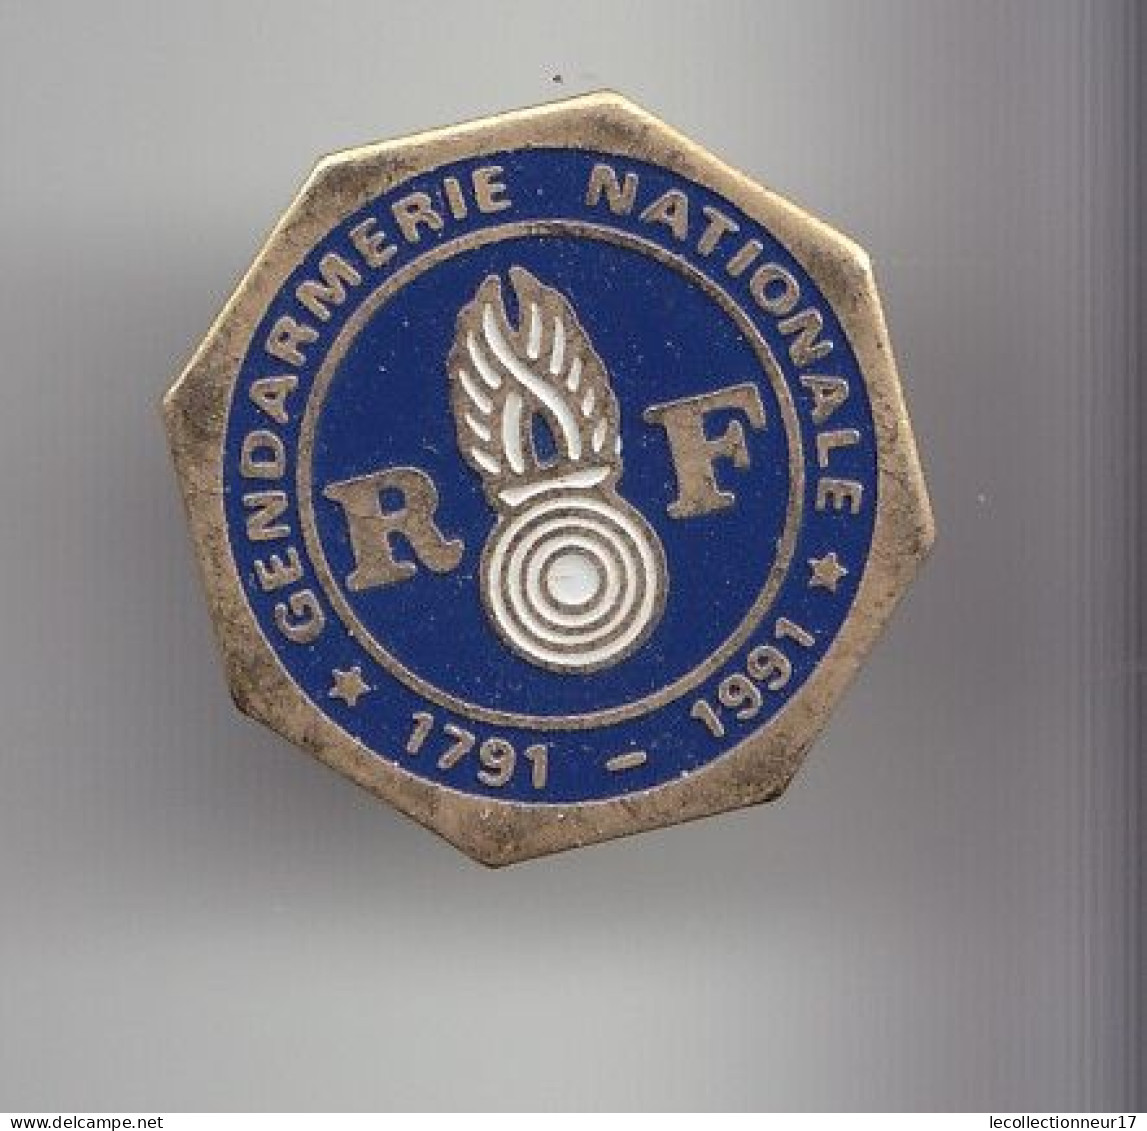 Pin's Gendarmerie Nationale 1791- 1991 Réf 3138 - Army